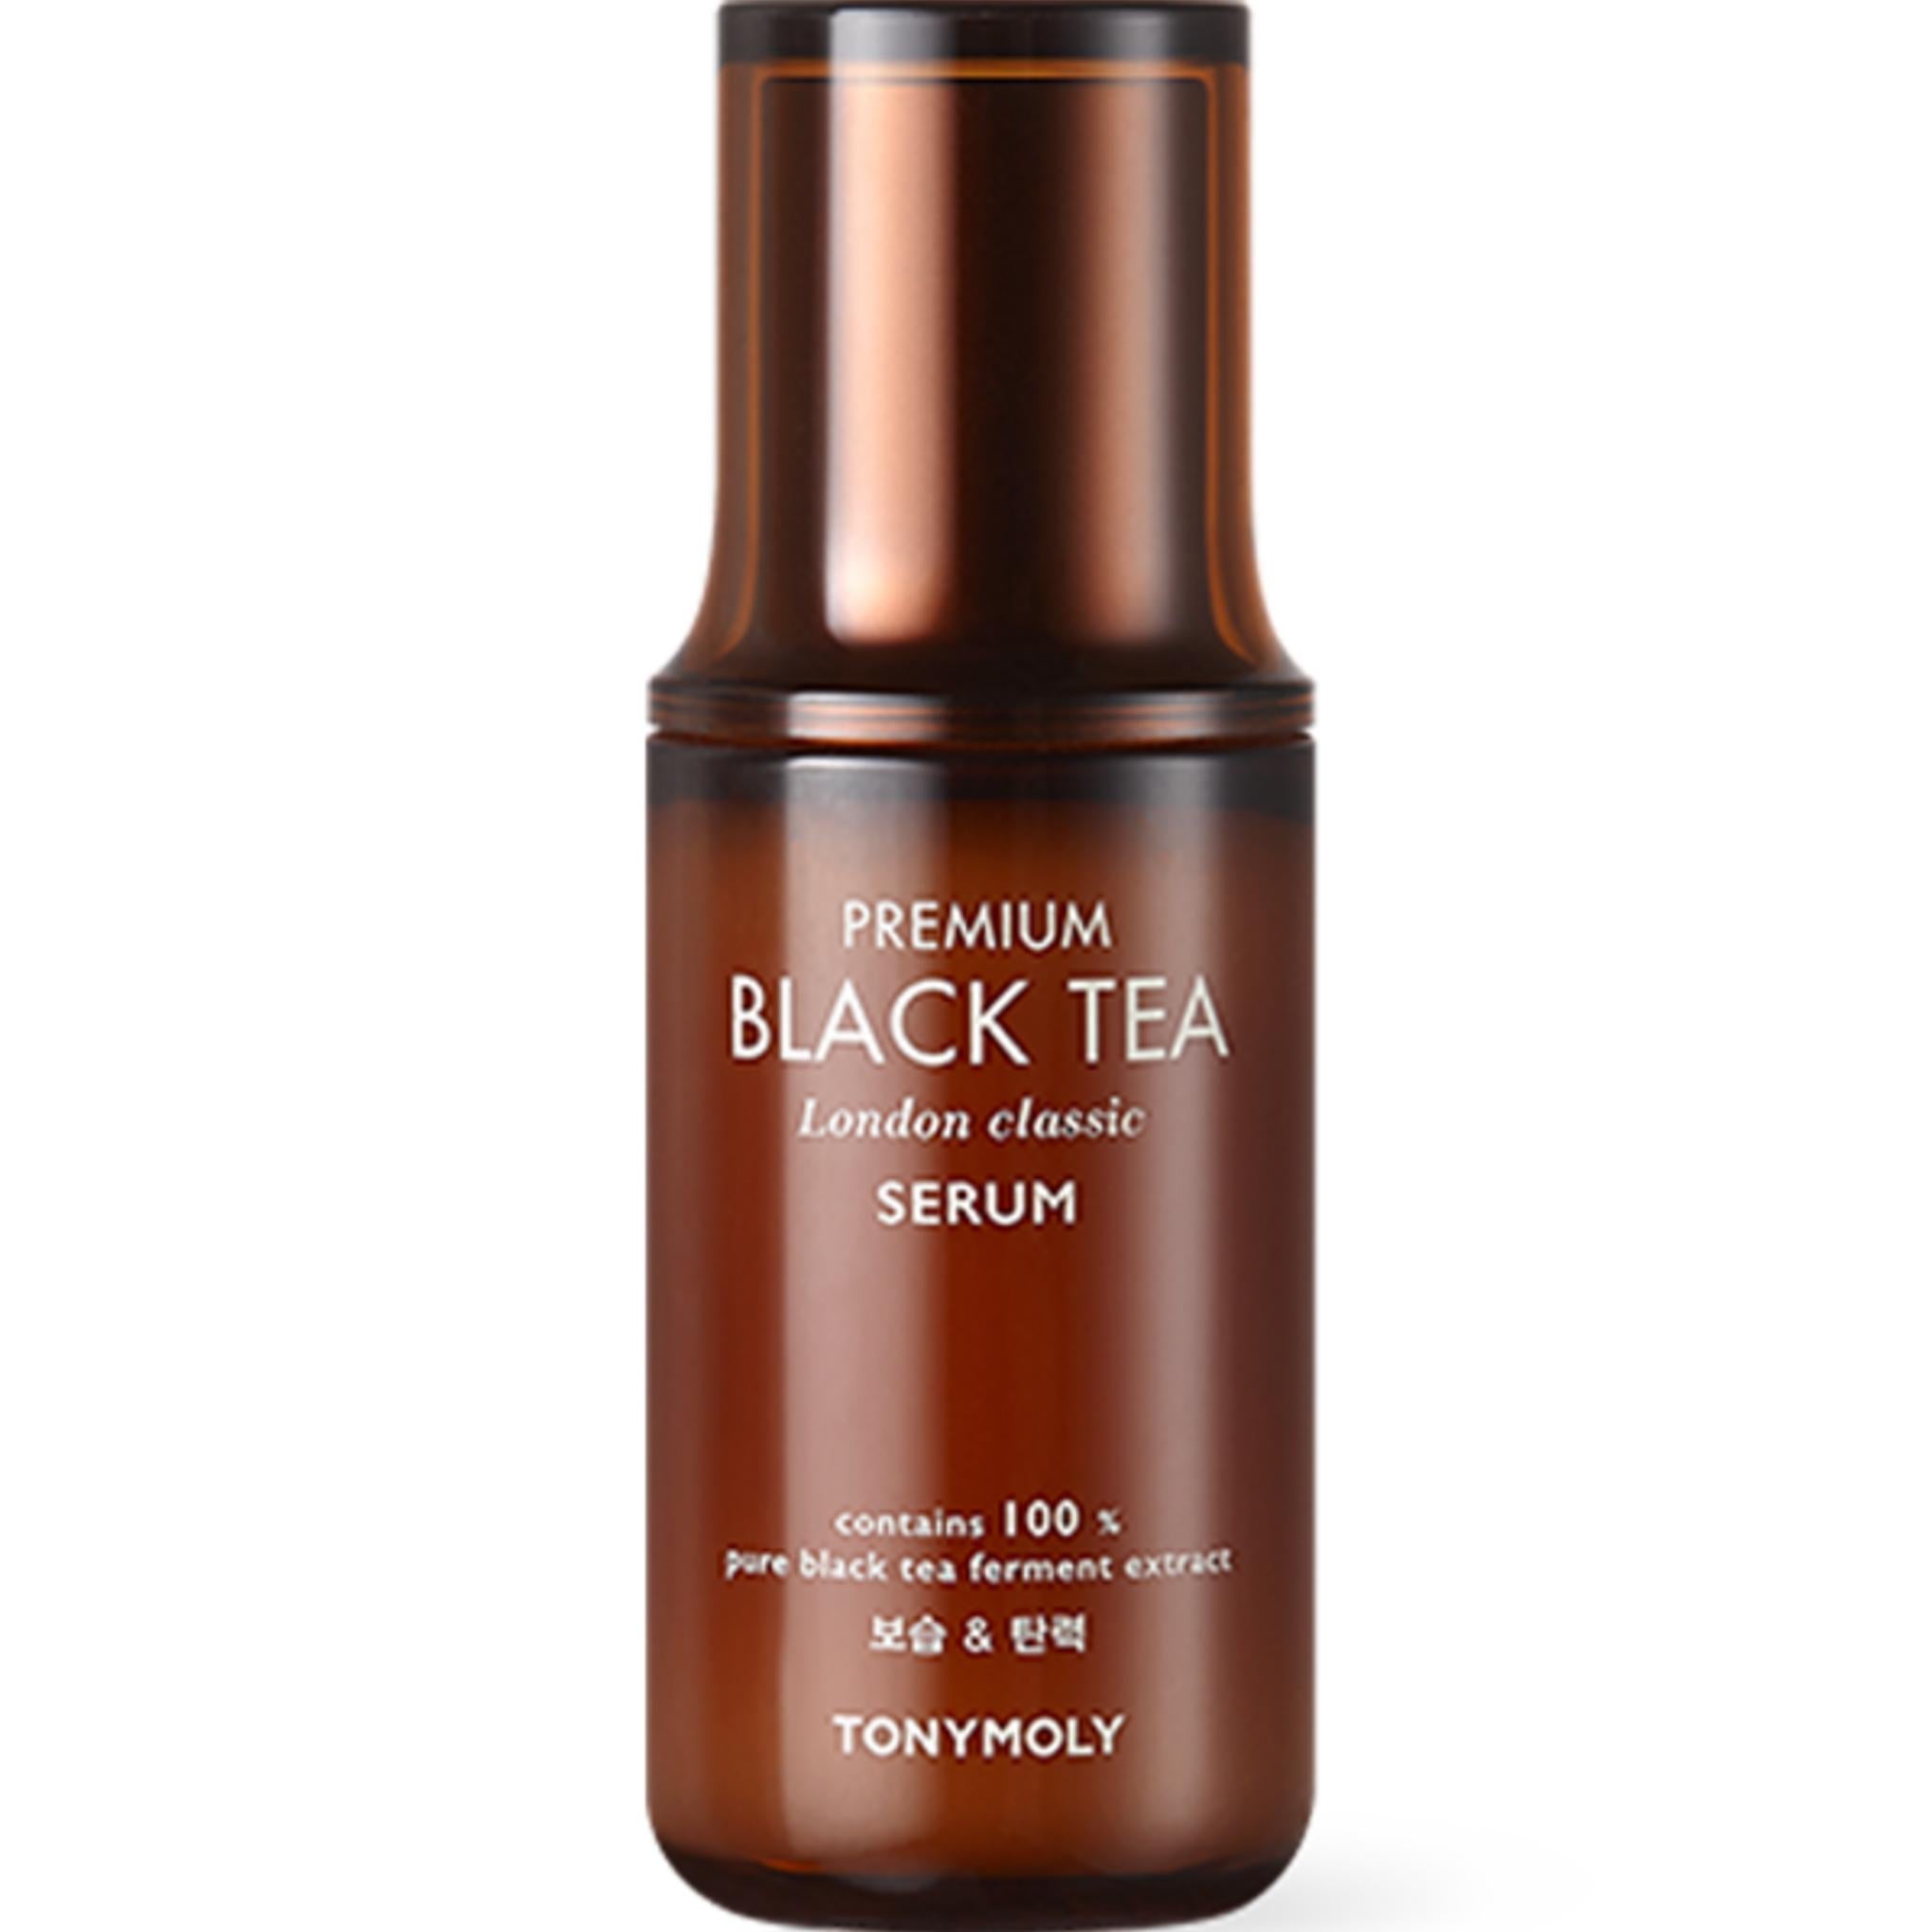 TONY MOLY Premium Black Tea London Classic Serum